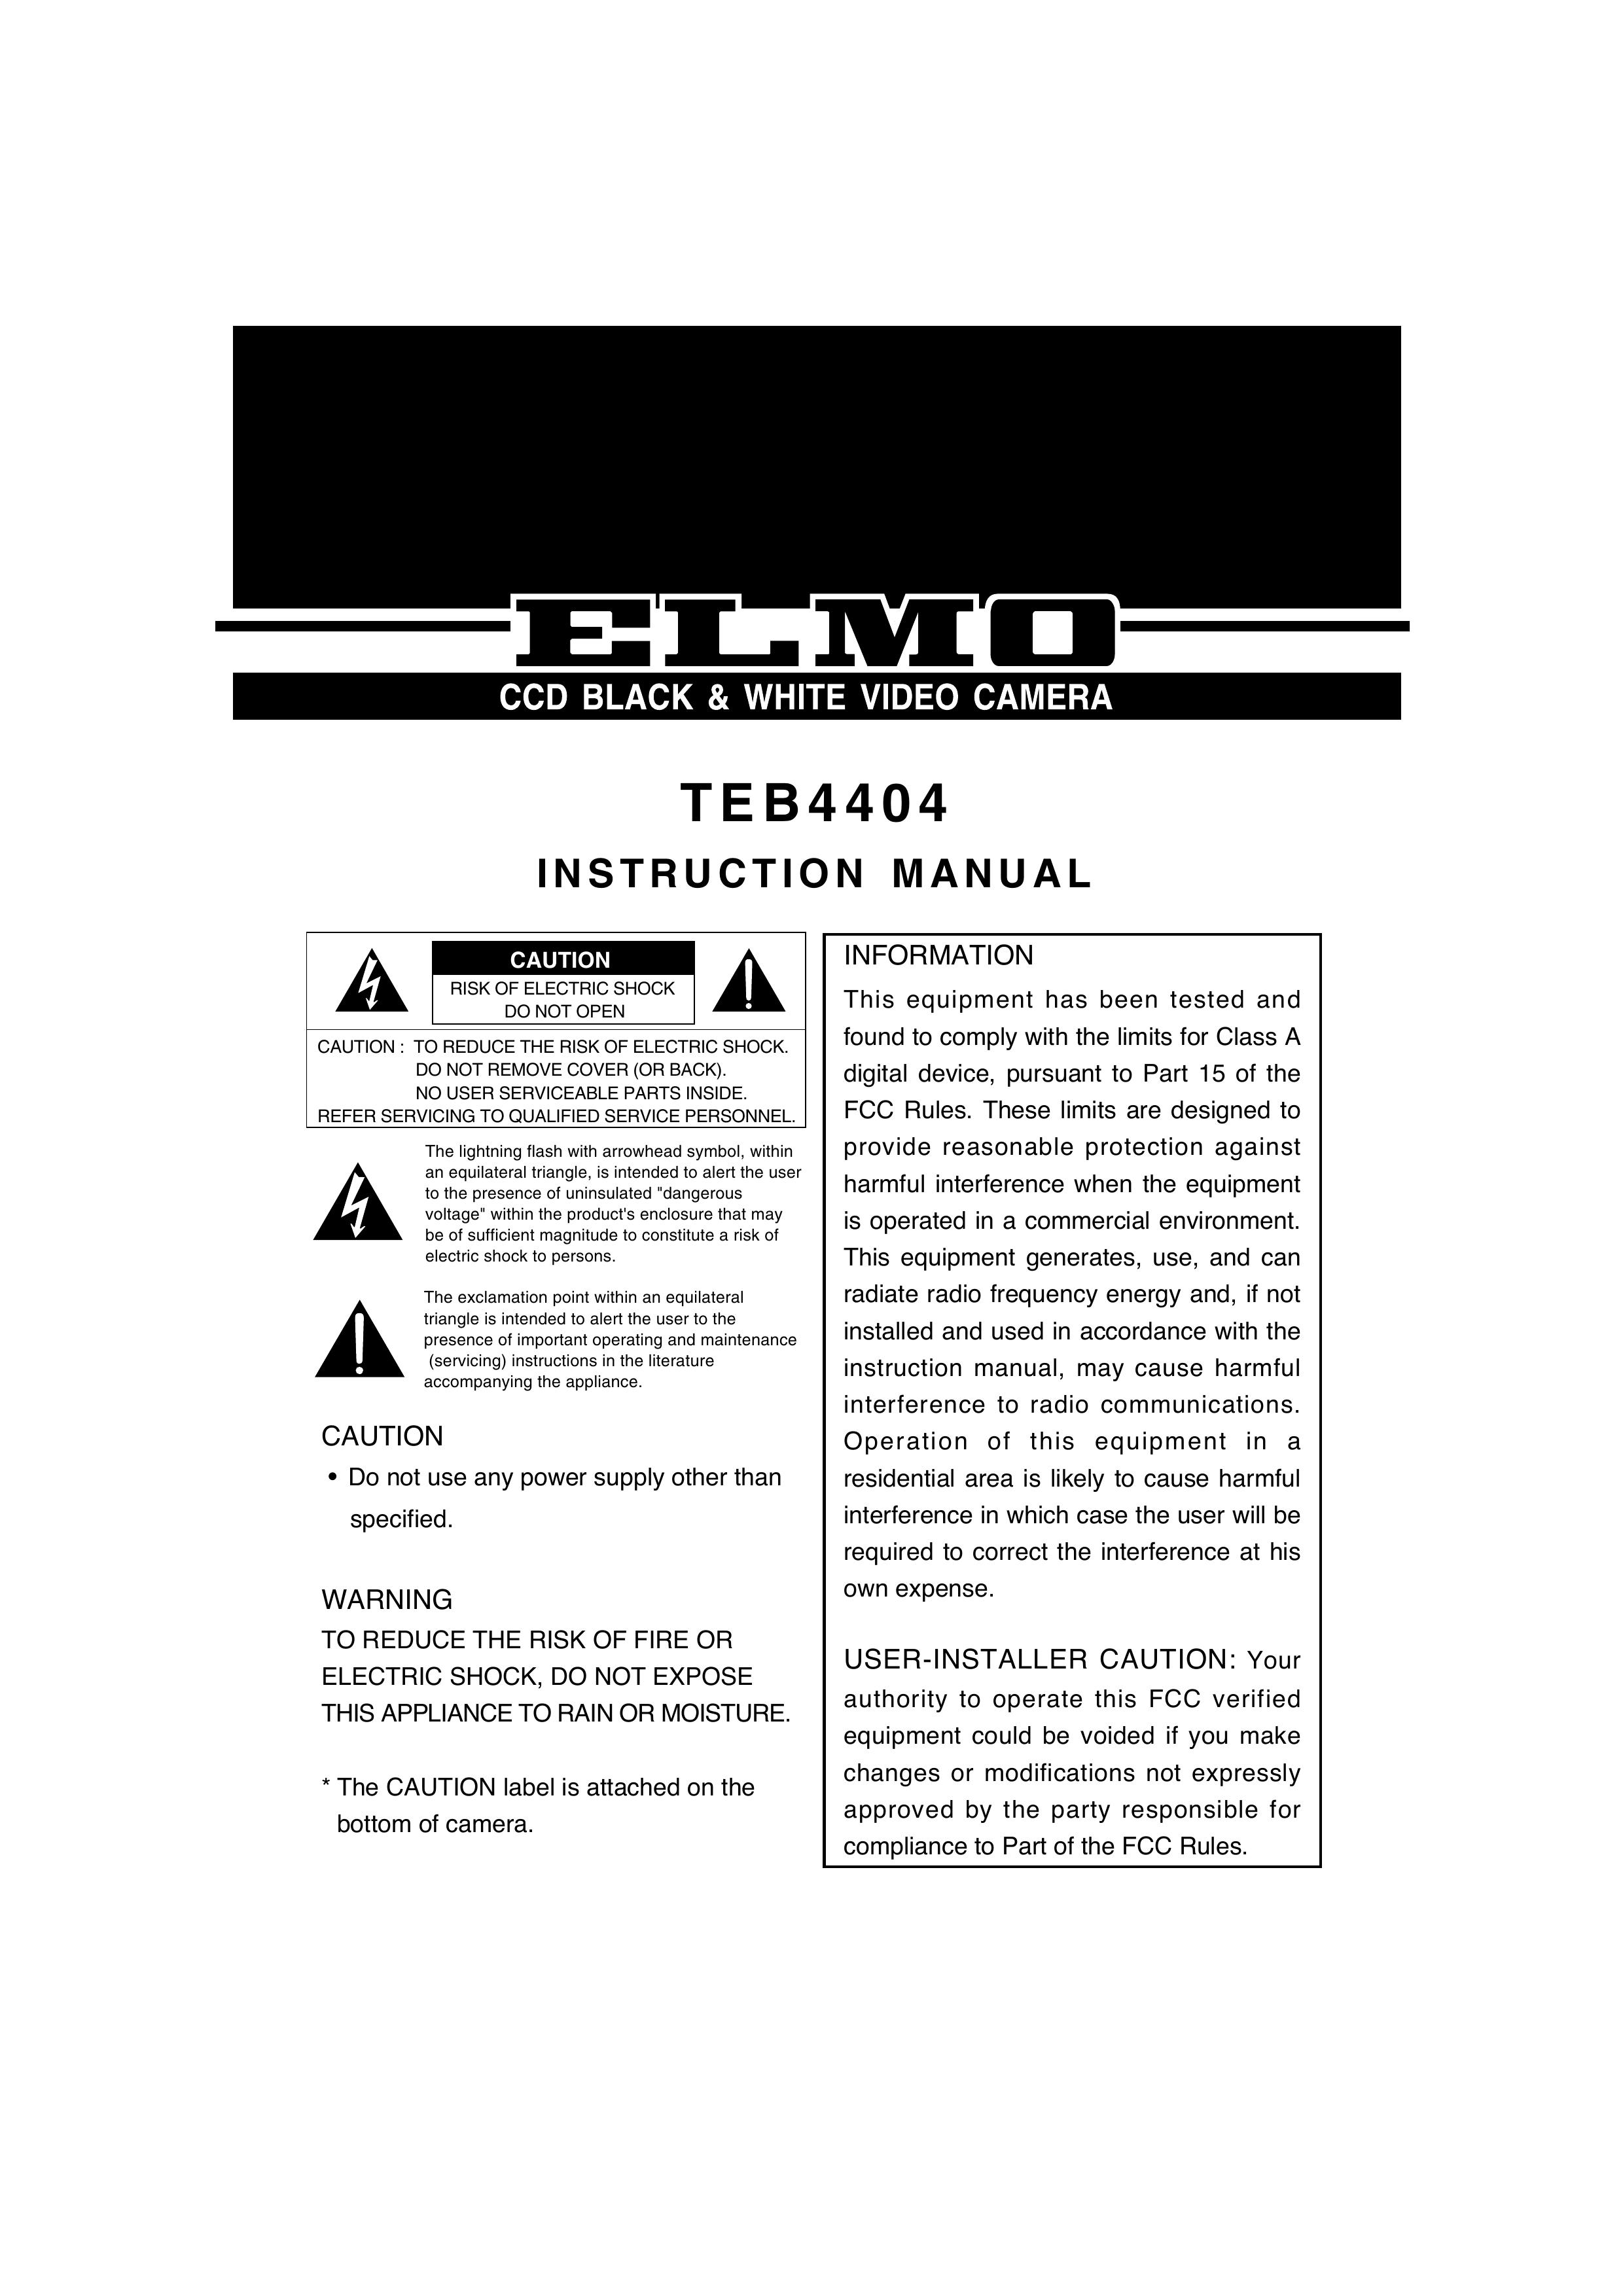 Elmo TEB4404 Security Camera User Manual